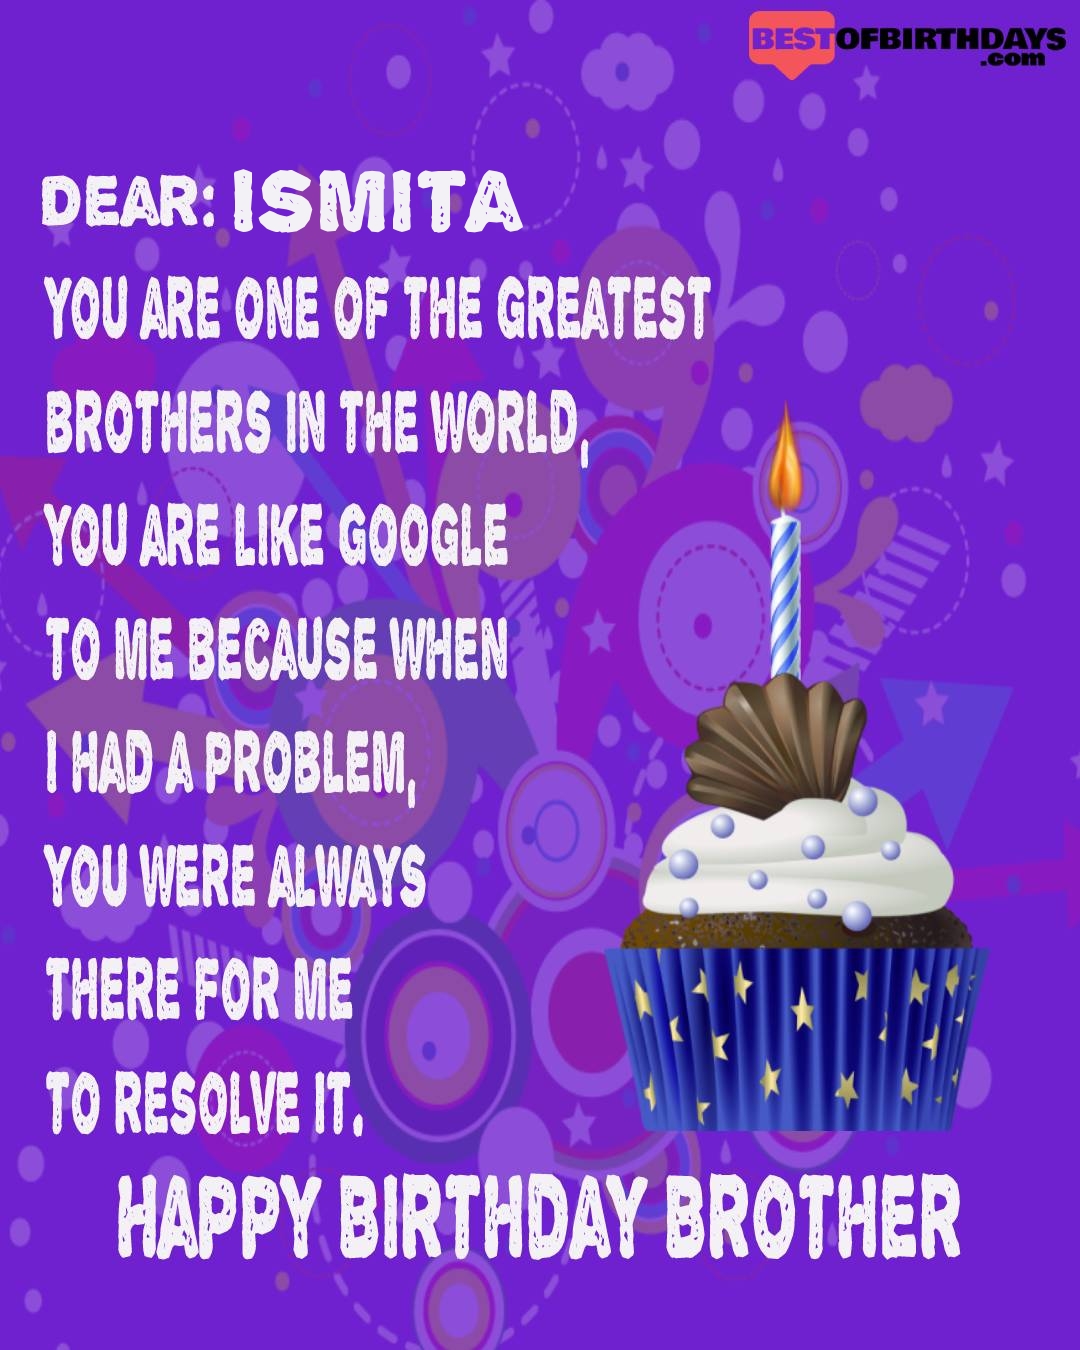 Happy birthday ismita bhai brother bro